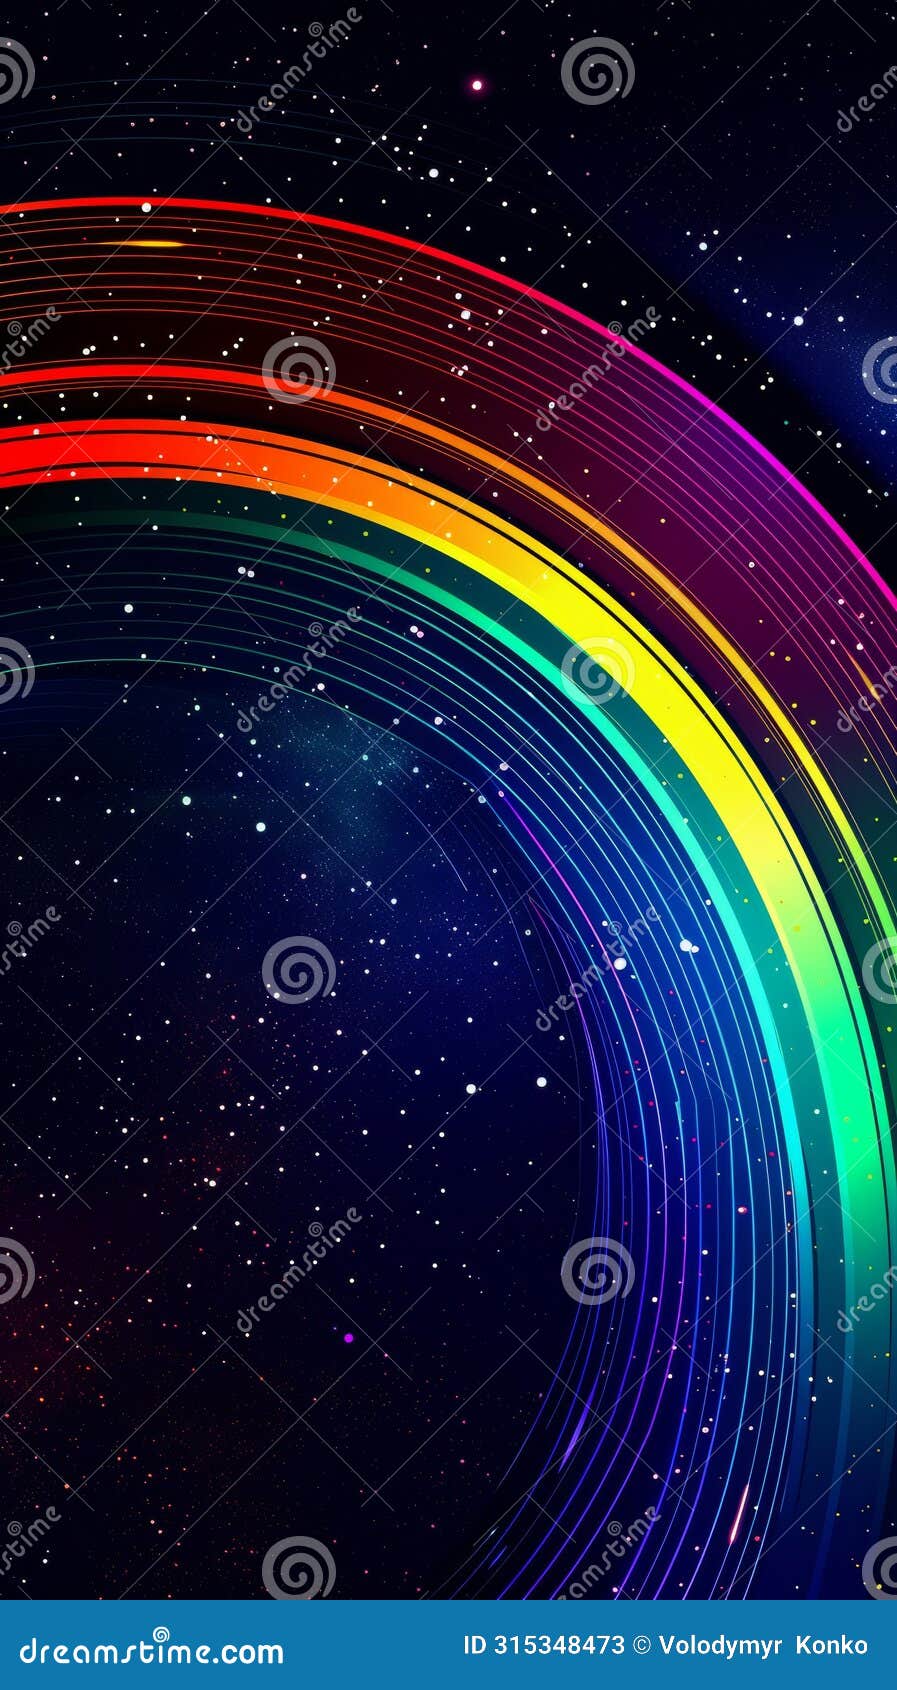 rainbow curvature in space 